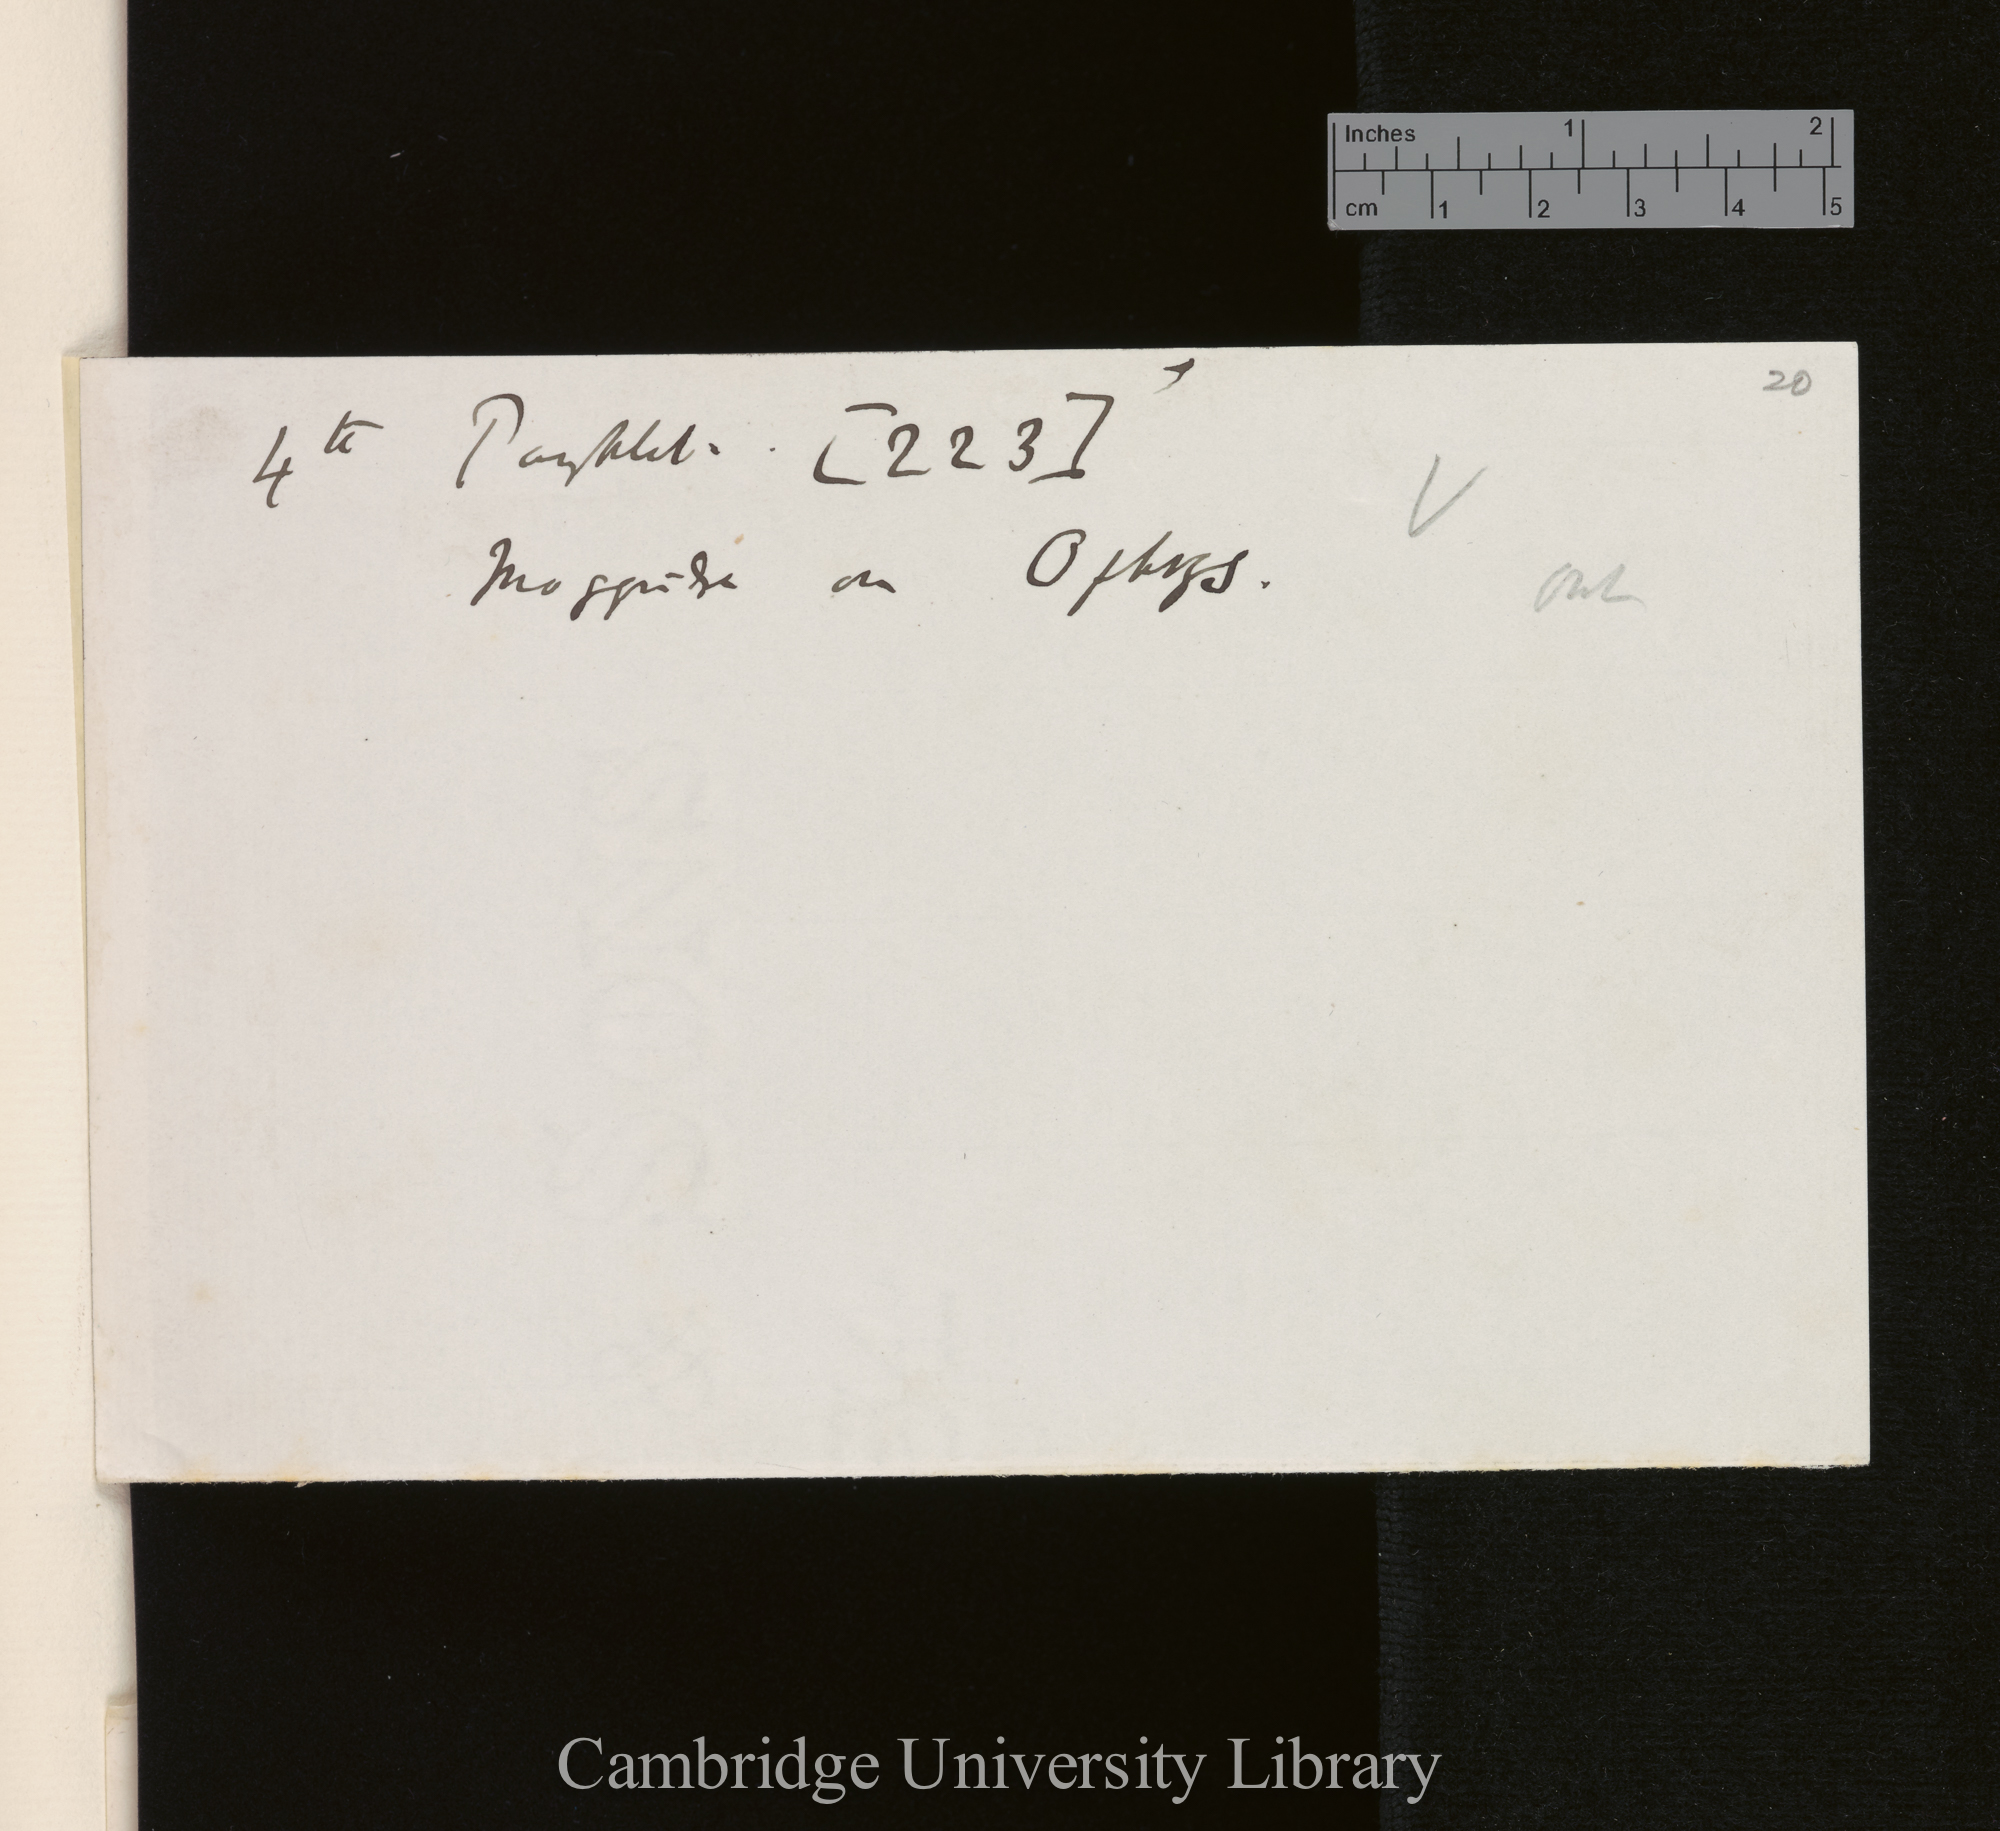 4to Pamphlet [223] / Moggridge on Ophrys / V / out